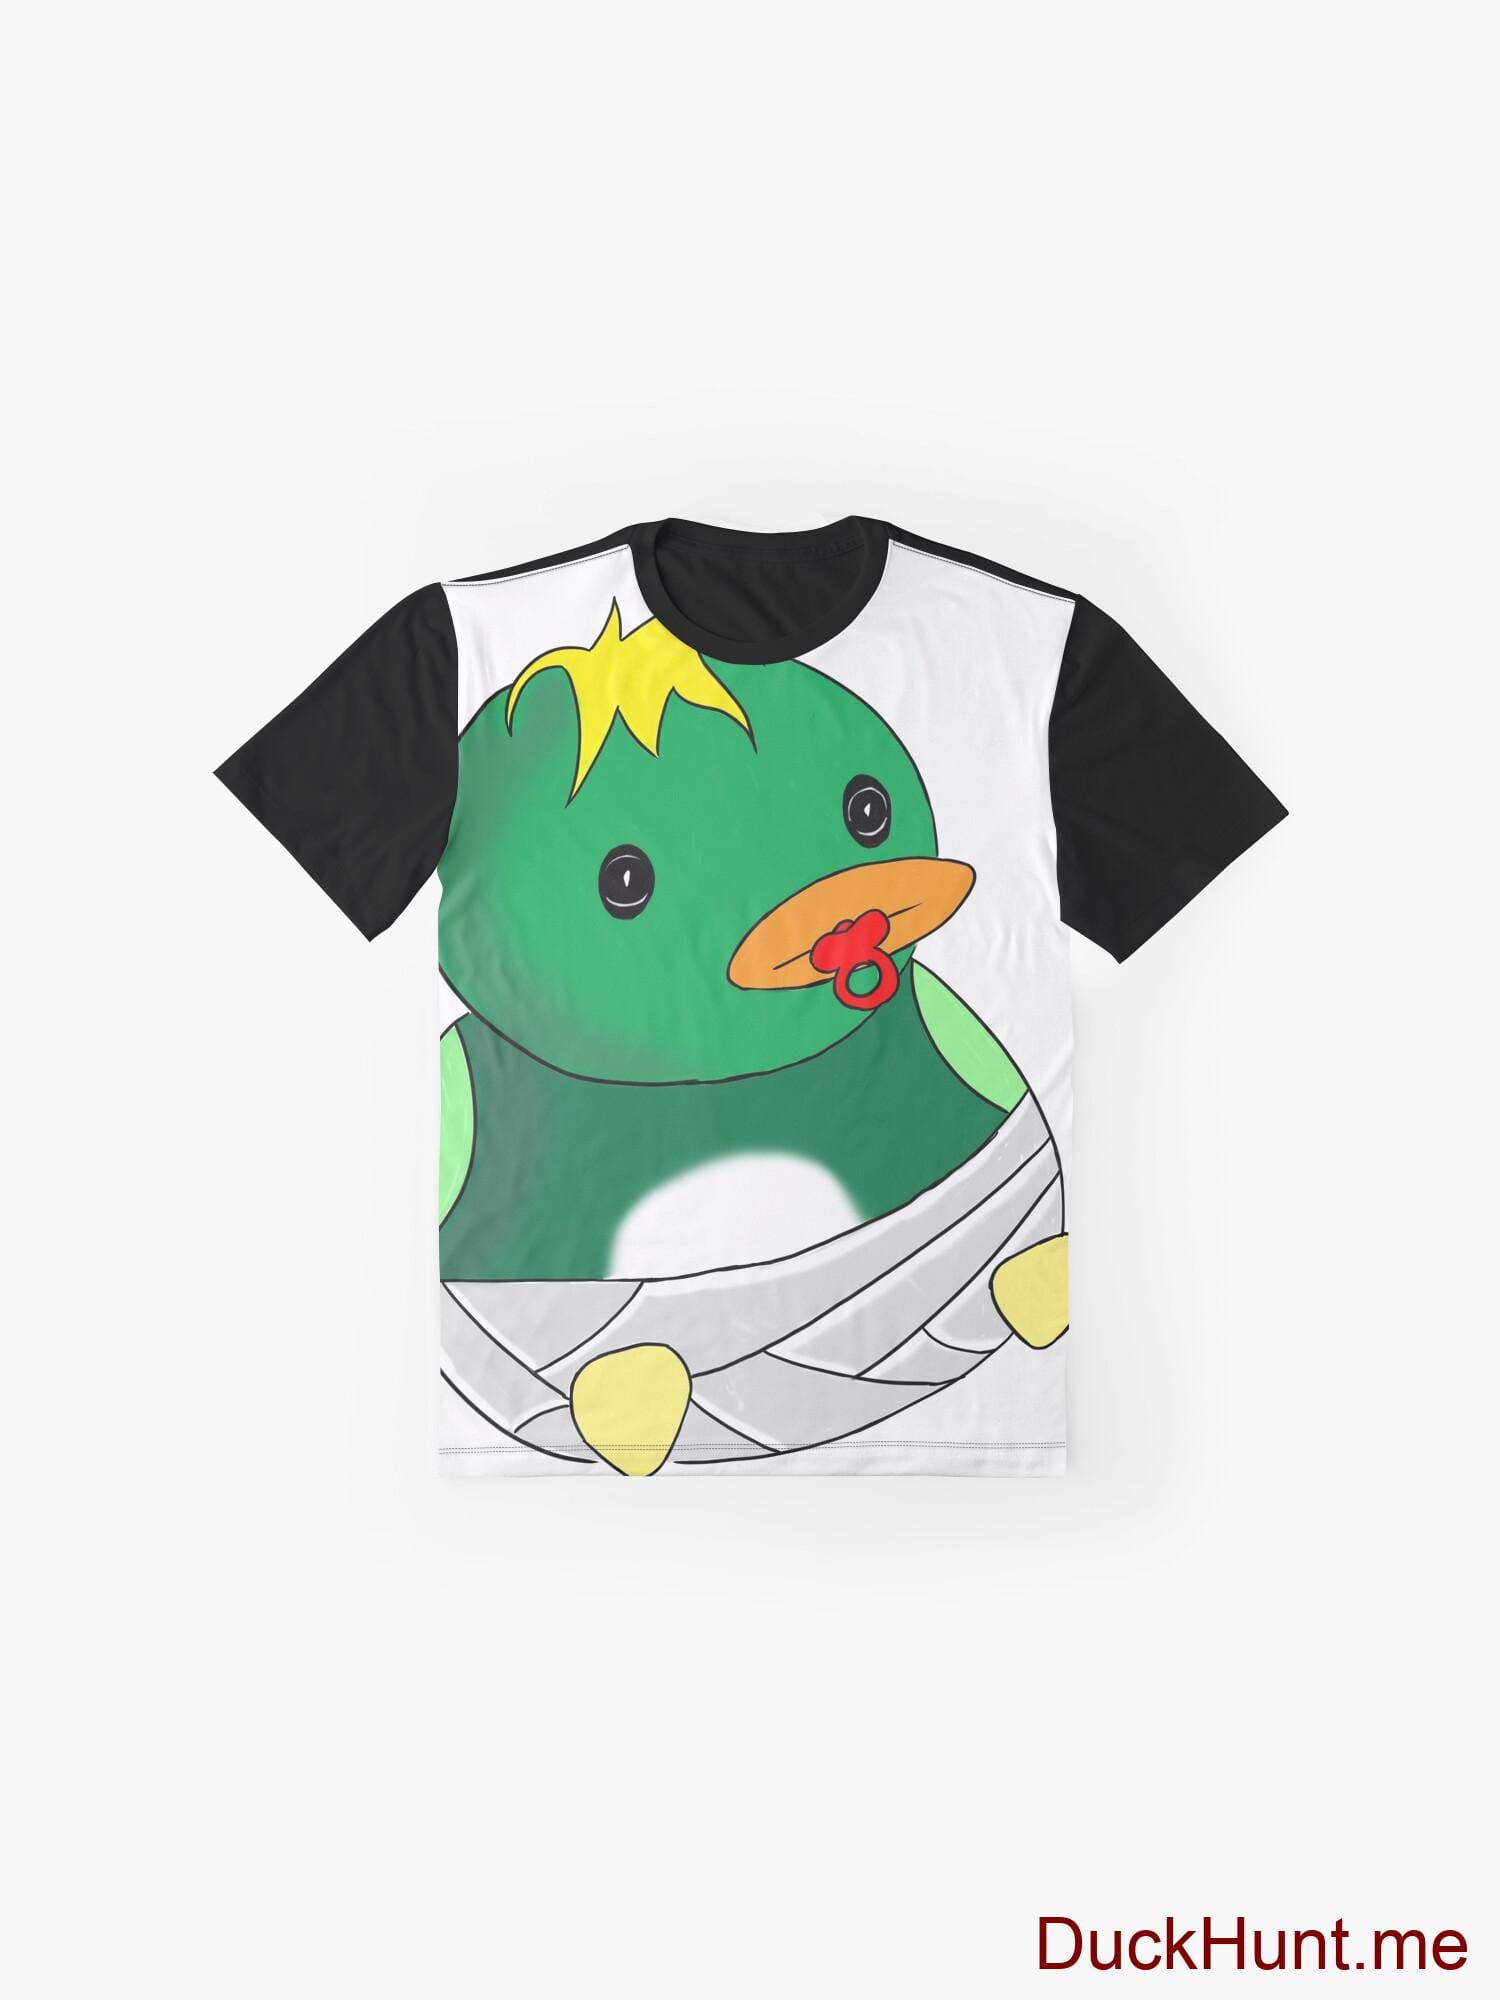 Baby duck Black Graphic T-Shirt alternative image 3